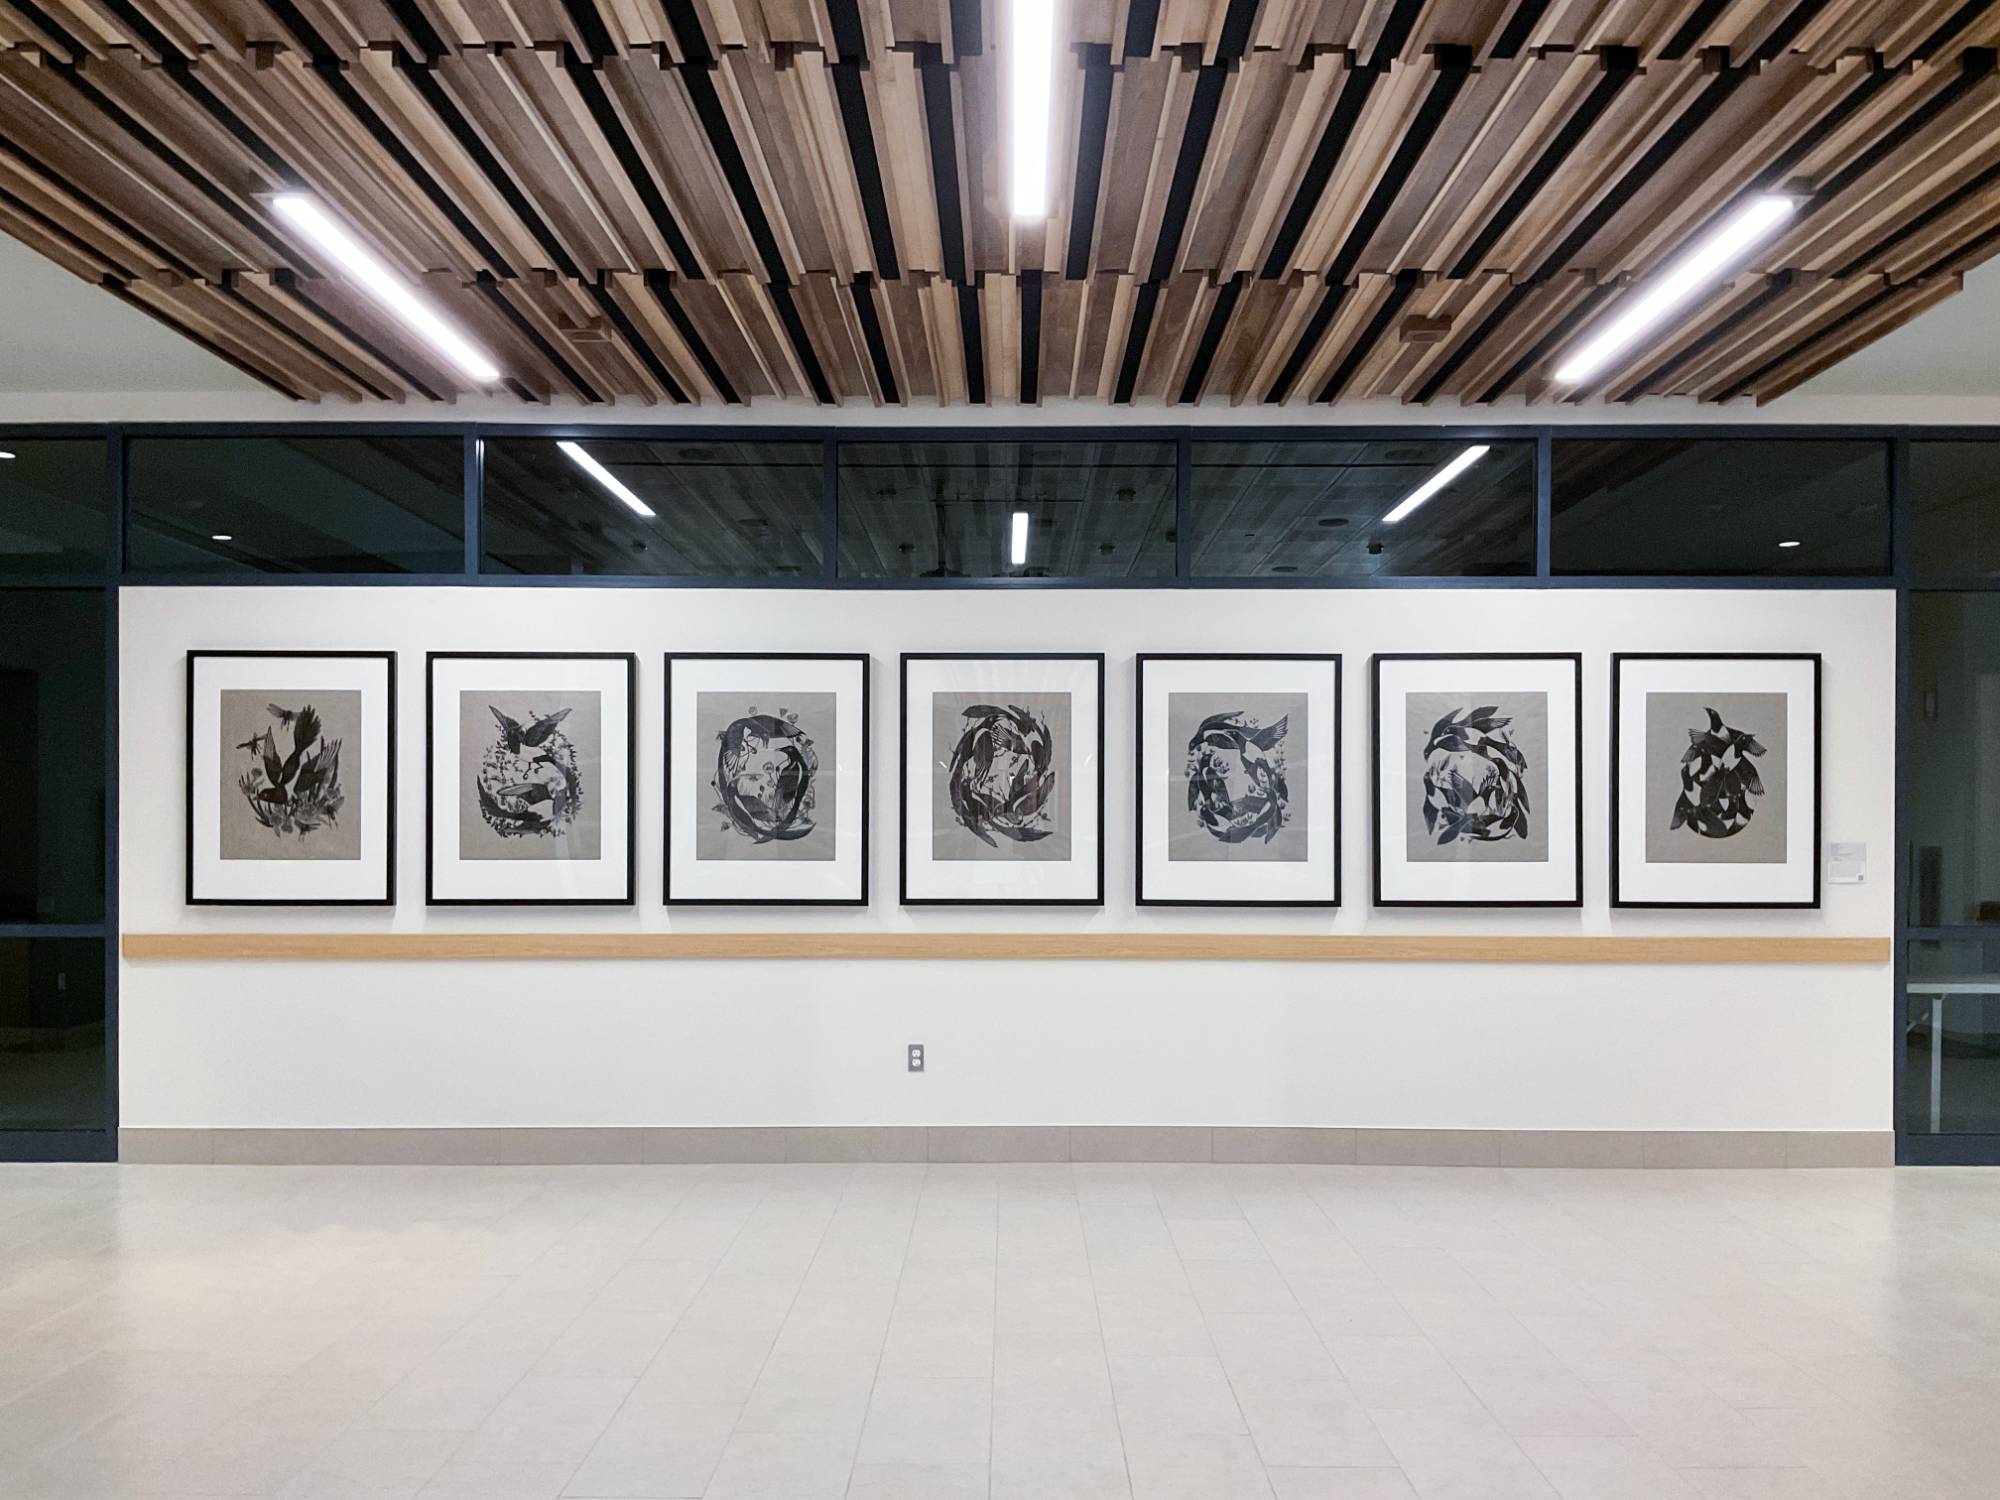 Hallways in DCIH featuring a series of prints by El Ronan.